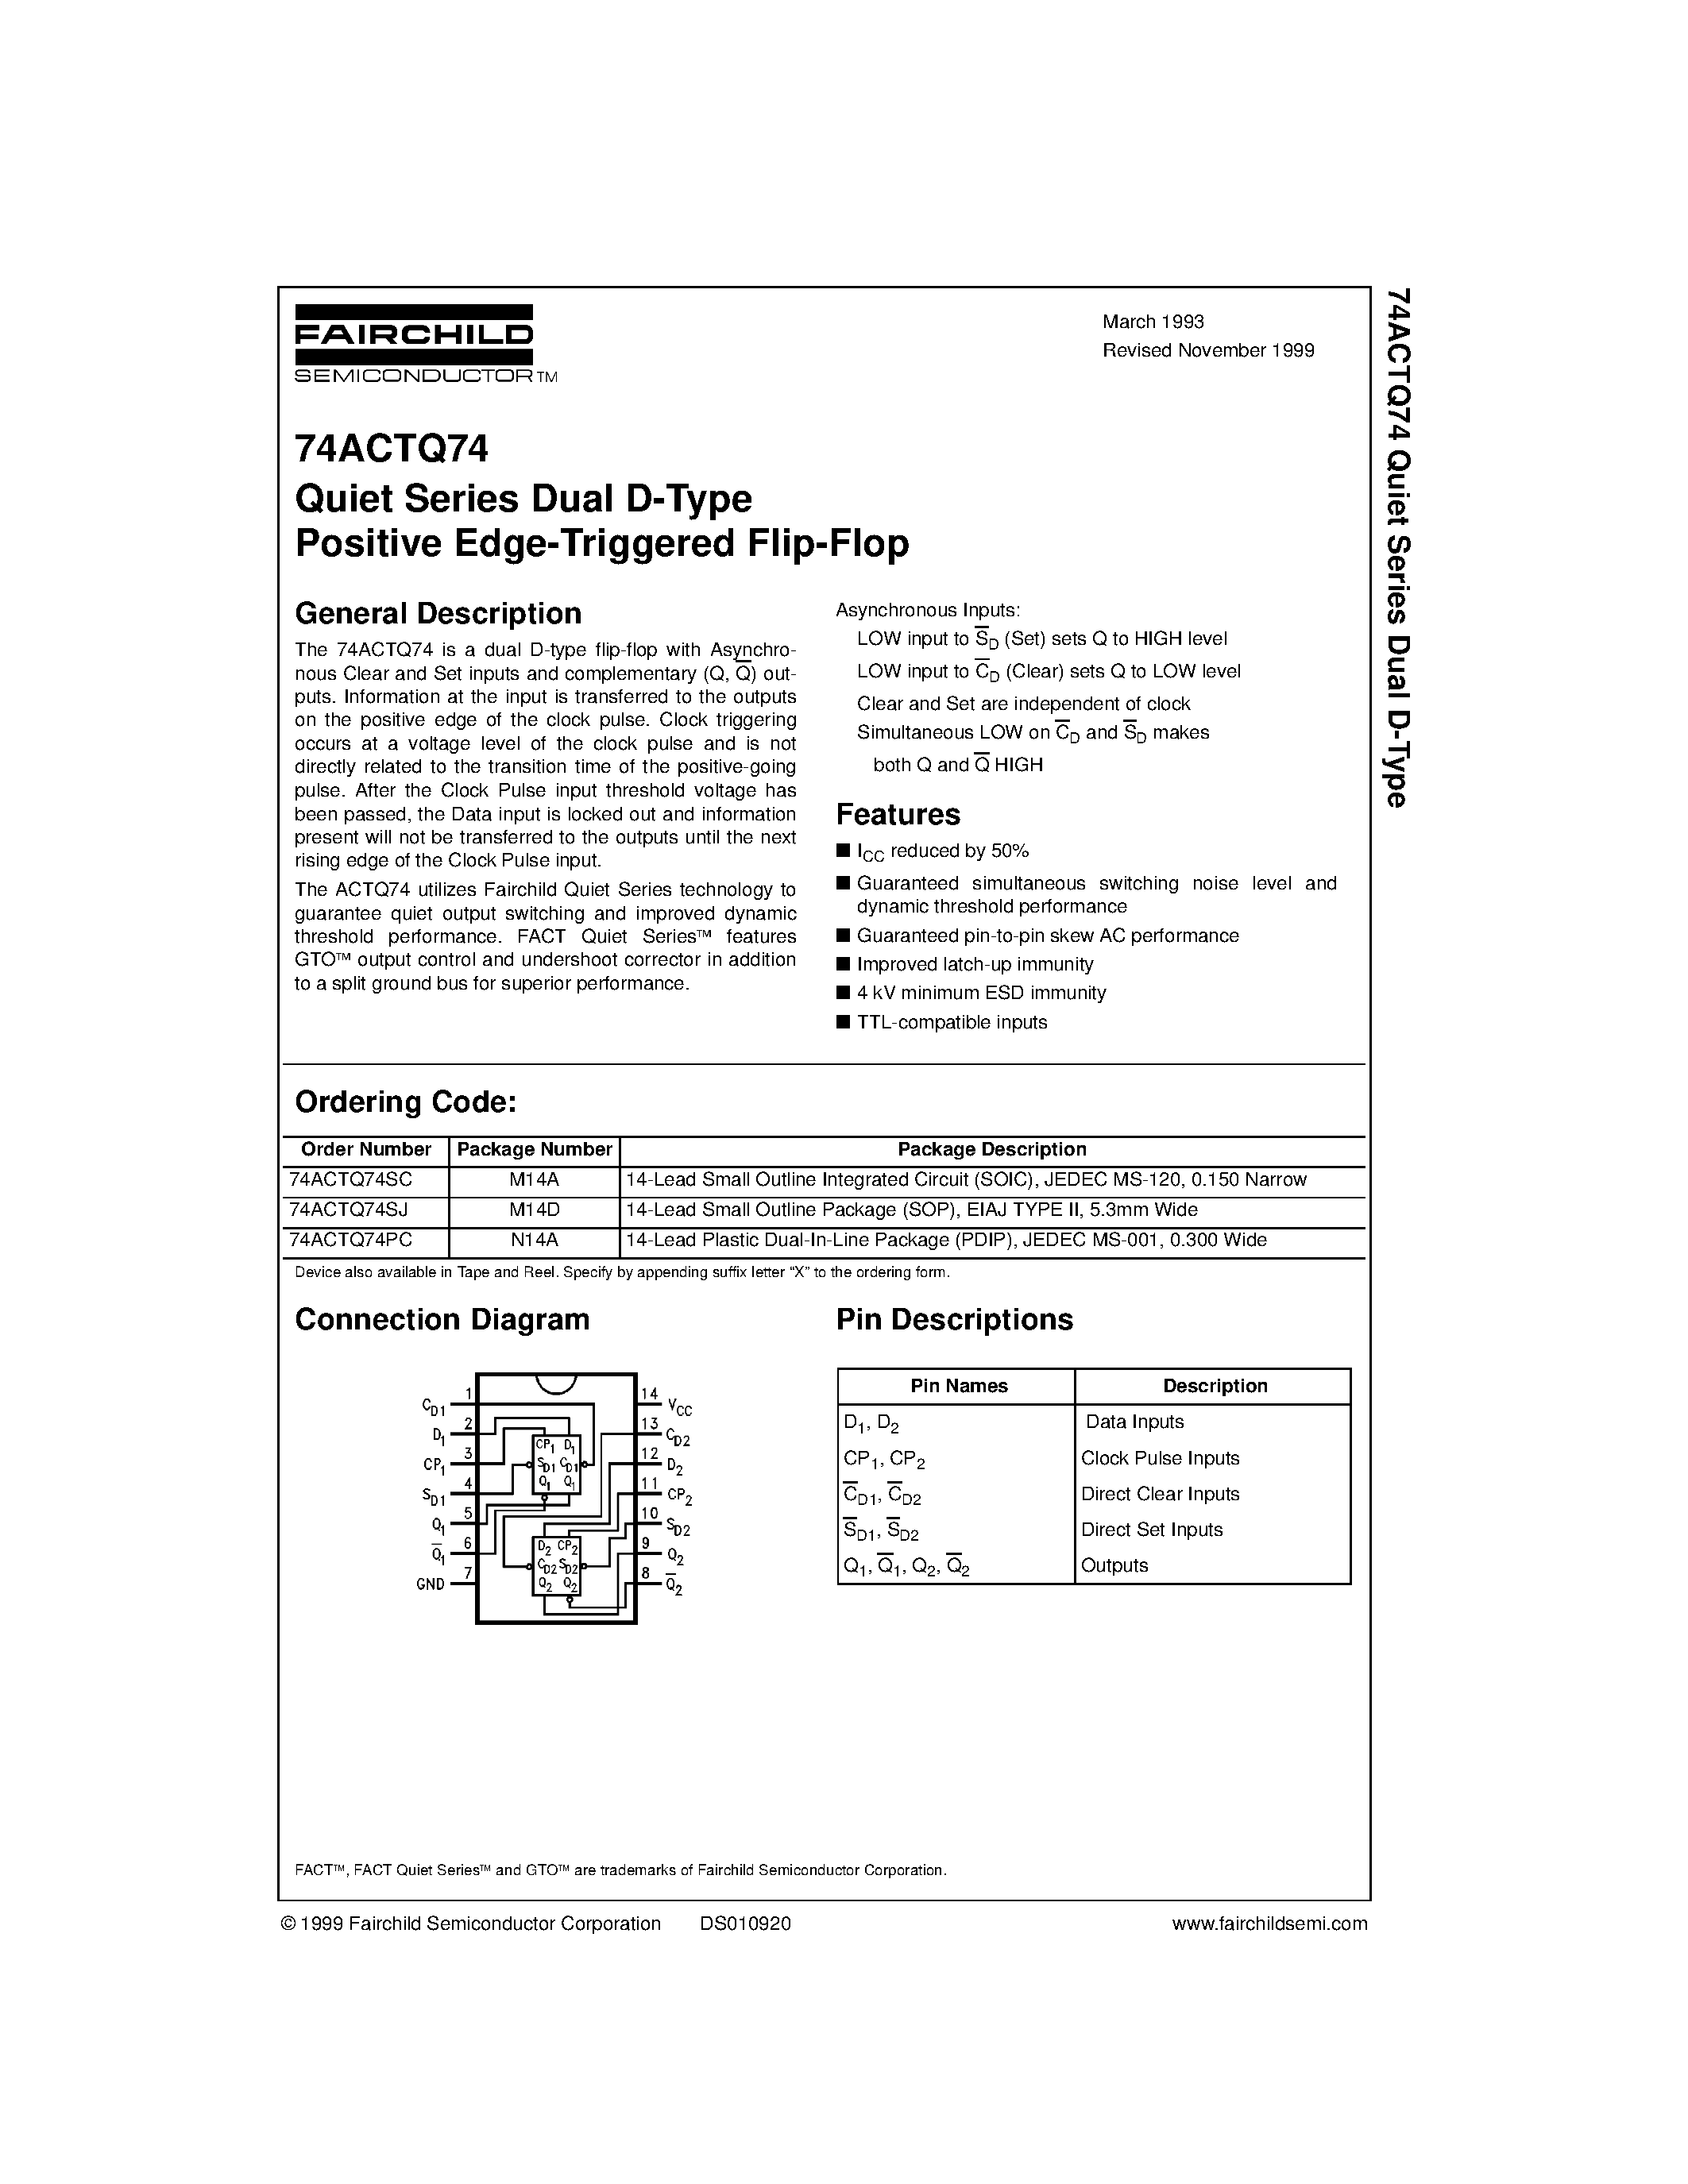 Datasheet 74ACTQ74 - Quiet Series Dual D-Type Positive Edge-Triggered Flip-Flop page 1